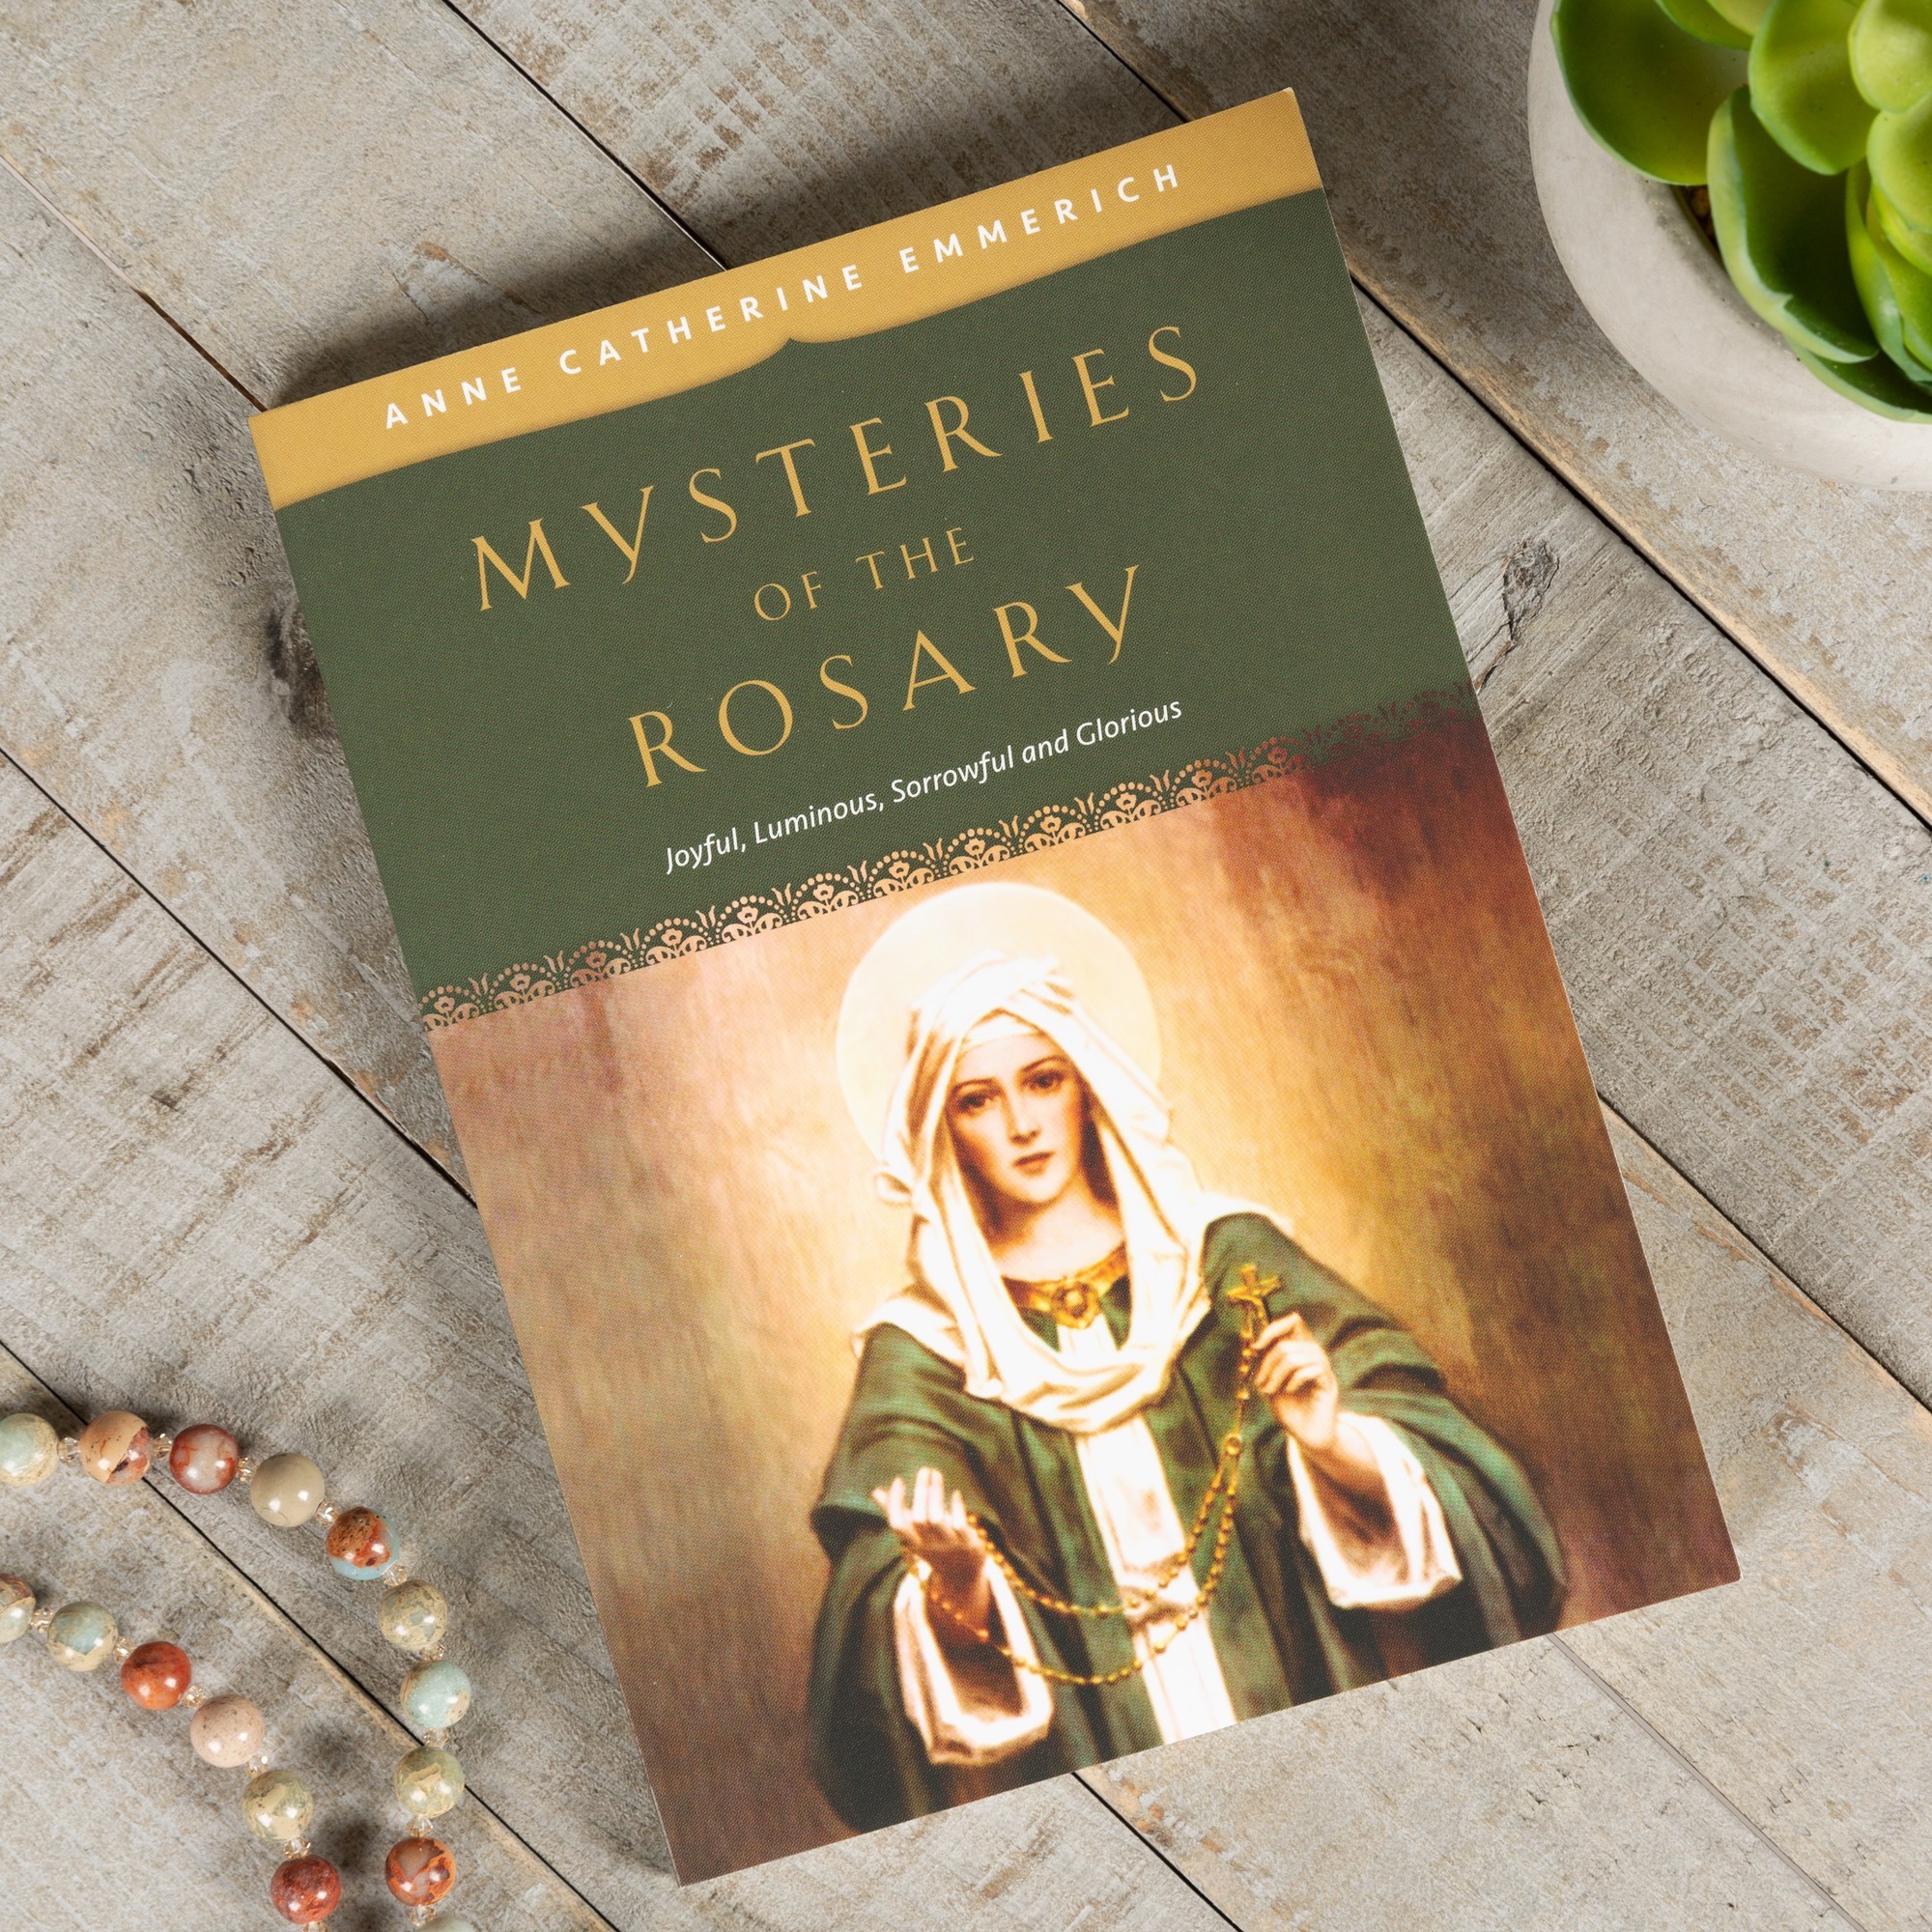 Mysteries of the Rosary: Joyful, Luminous, Sorrowful and Glorious